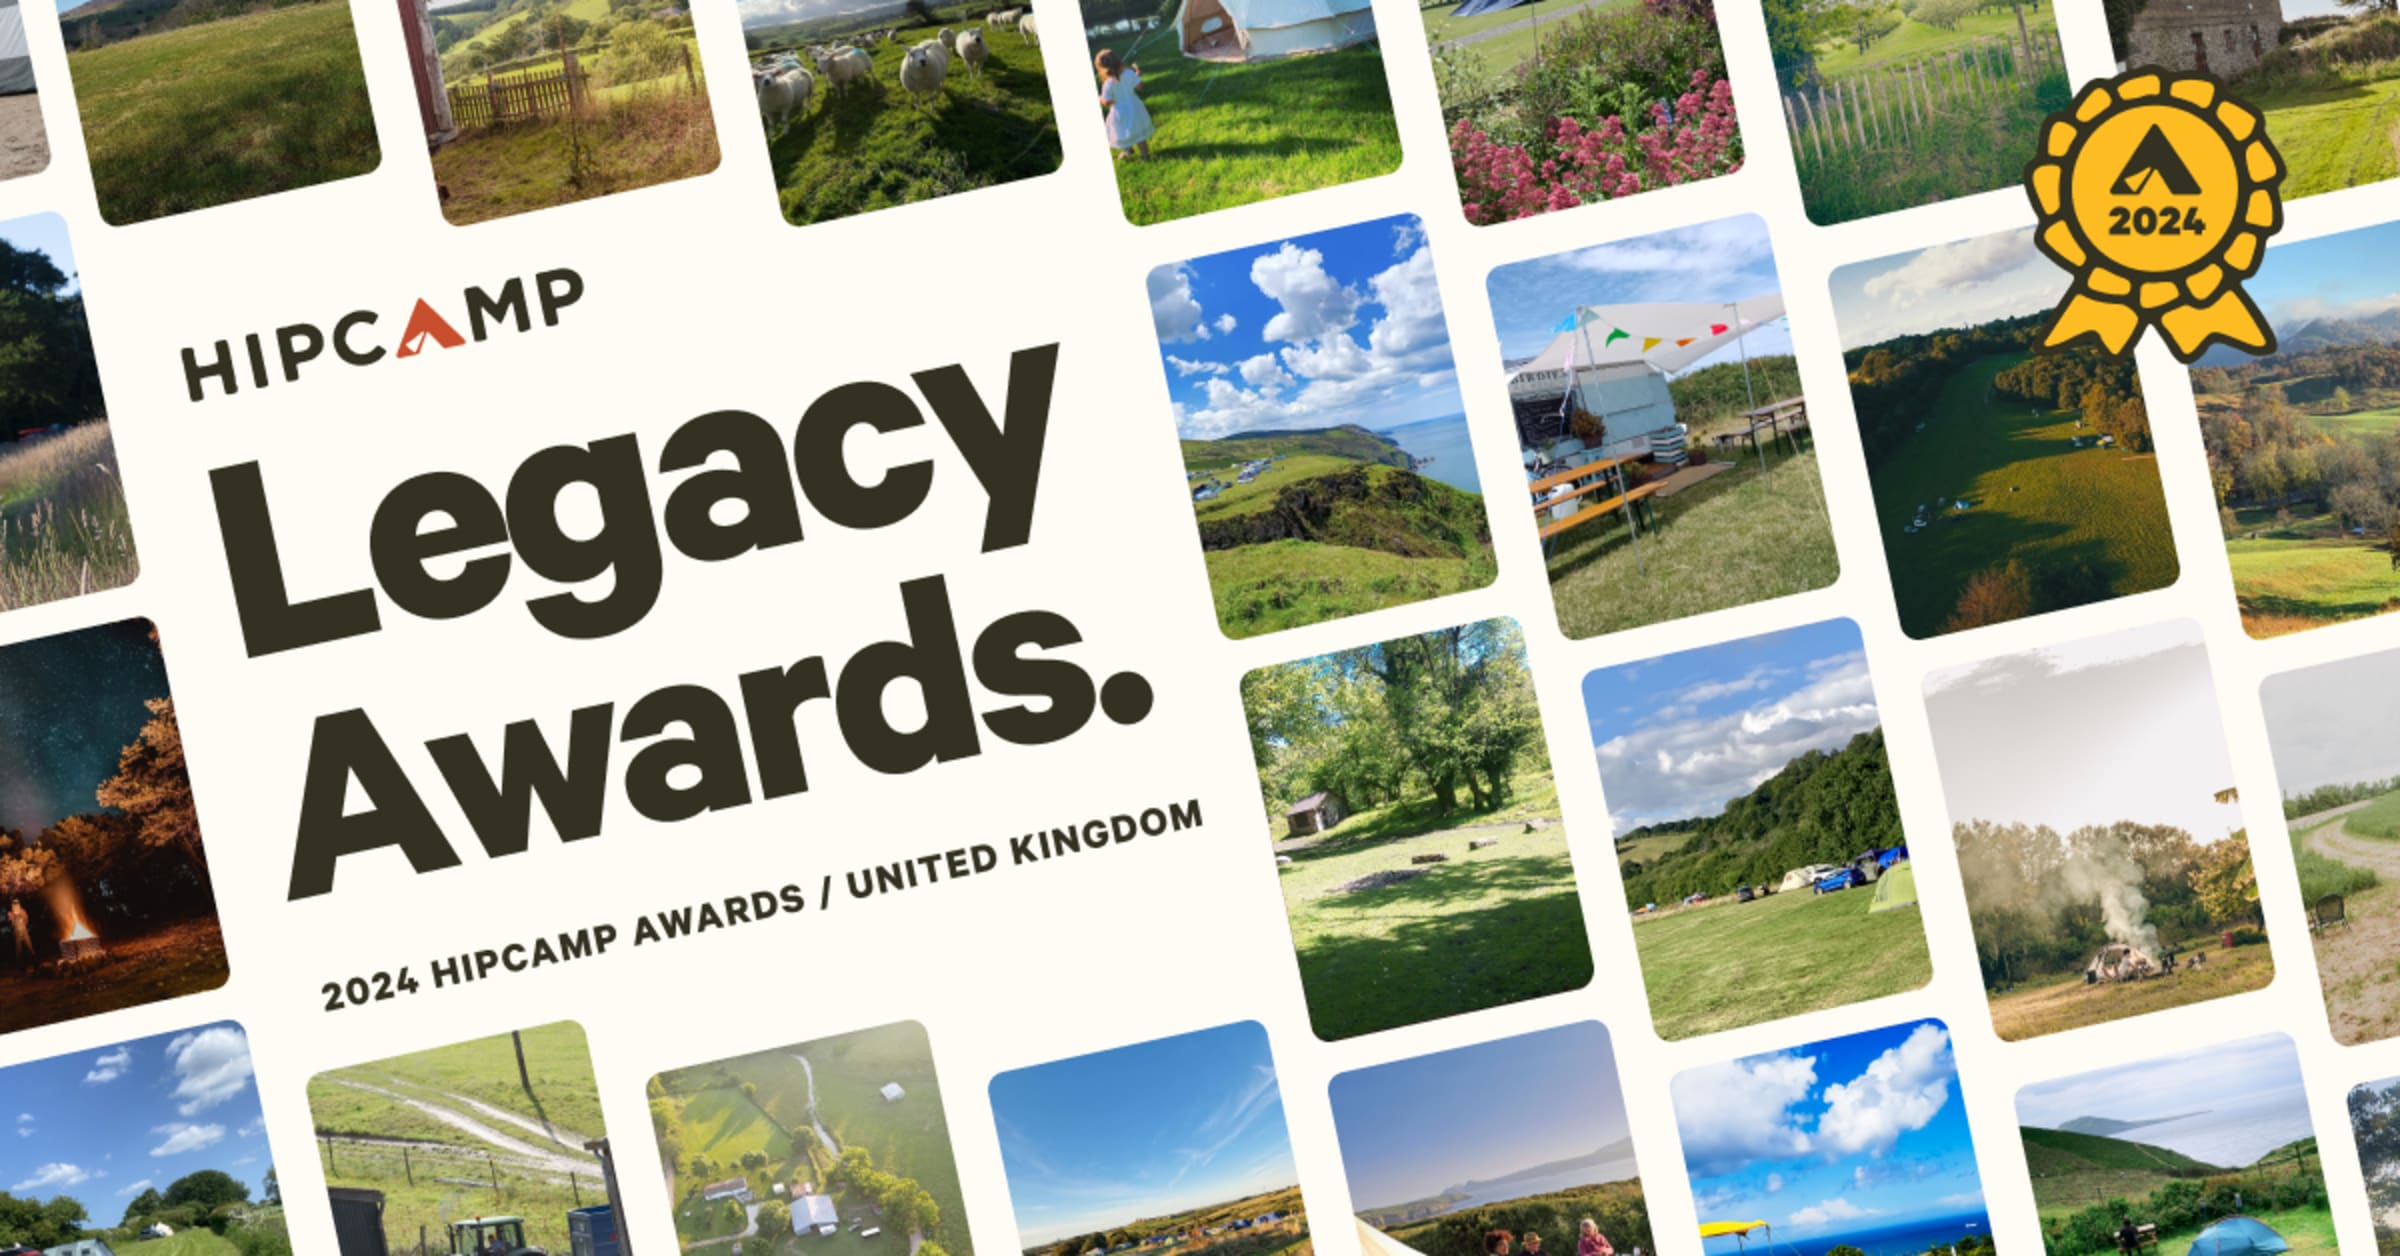 Hipcamp Legacy Awards 2024: UK Edition